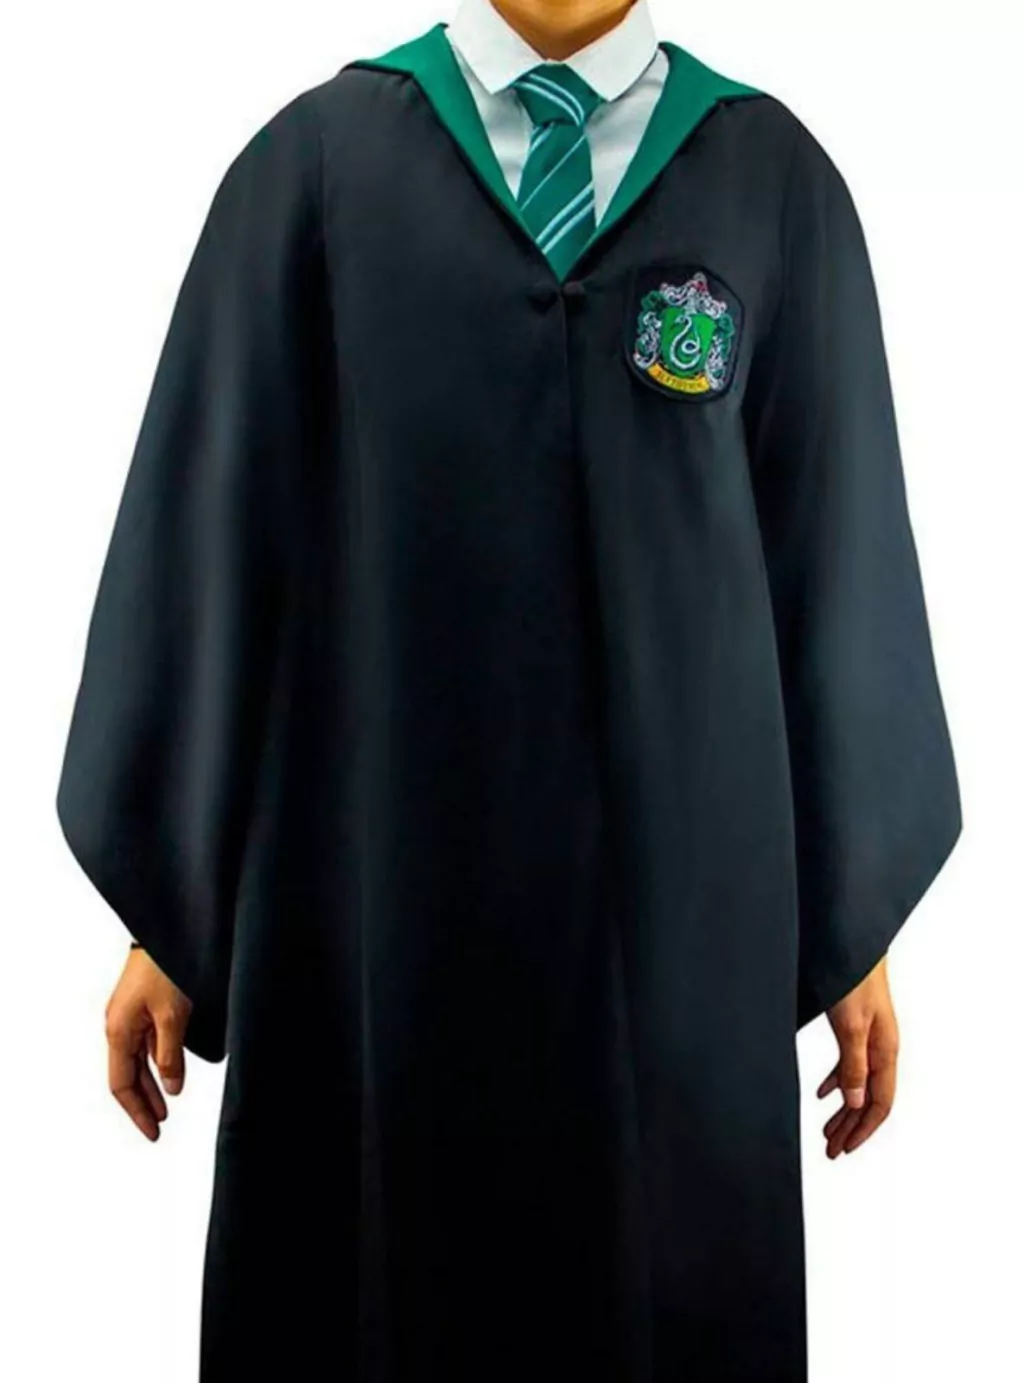 Buena voluntad fábrica diferente a Túnica niño Harry Potter Slytherin Oficial